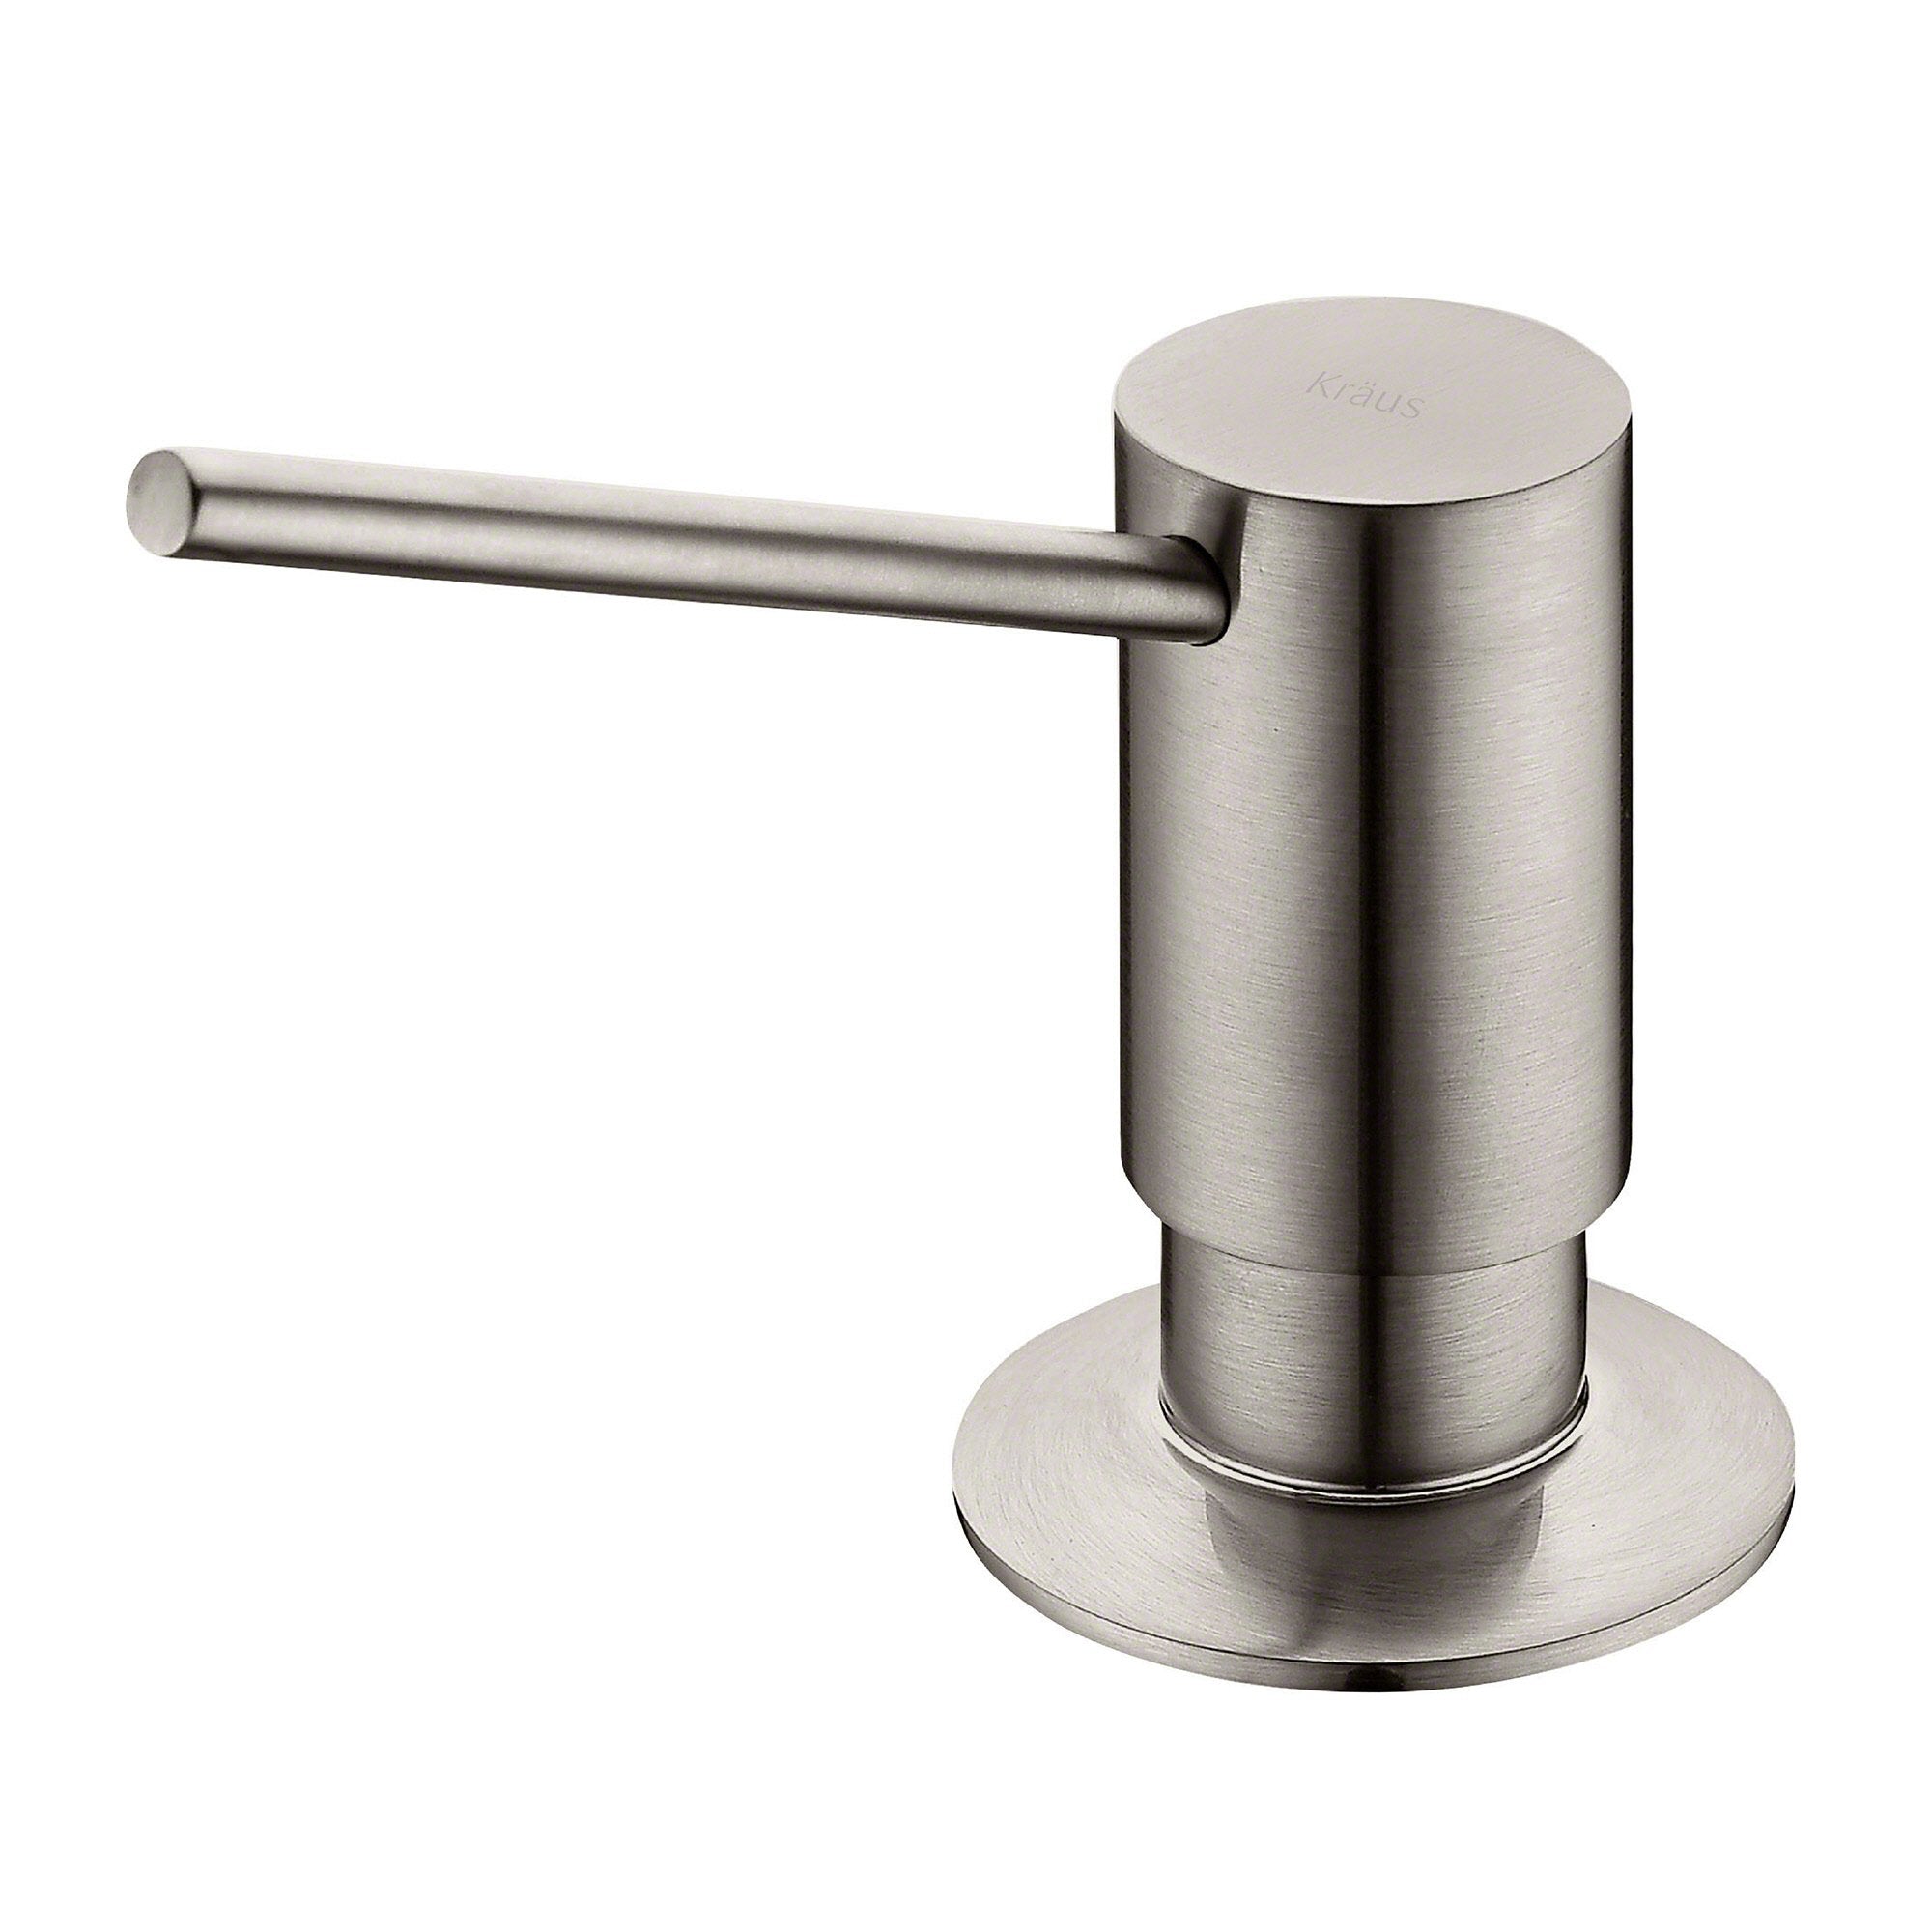 Kraus Soap Dispenser in Stainless Steel, Silver